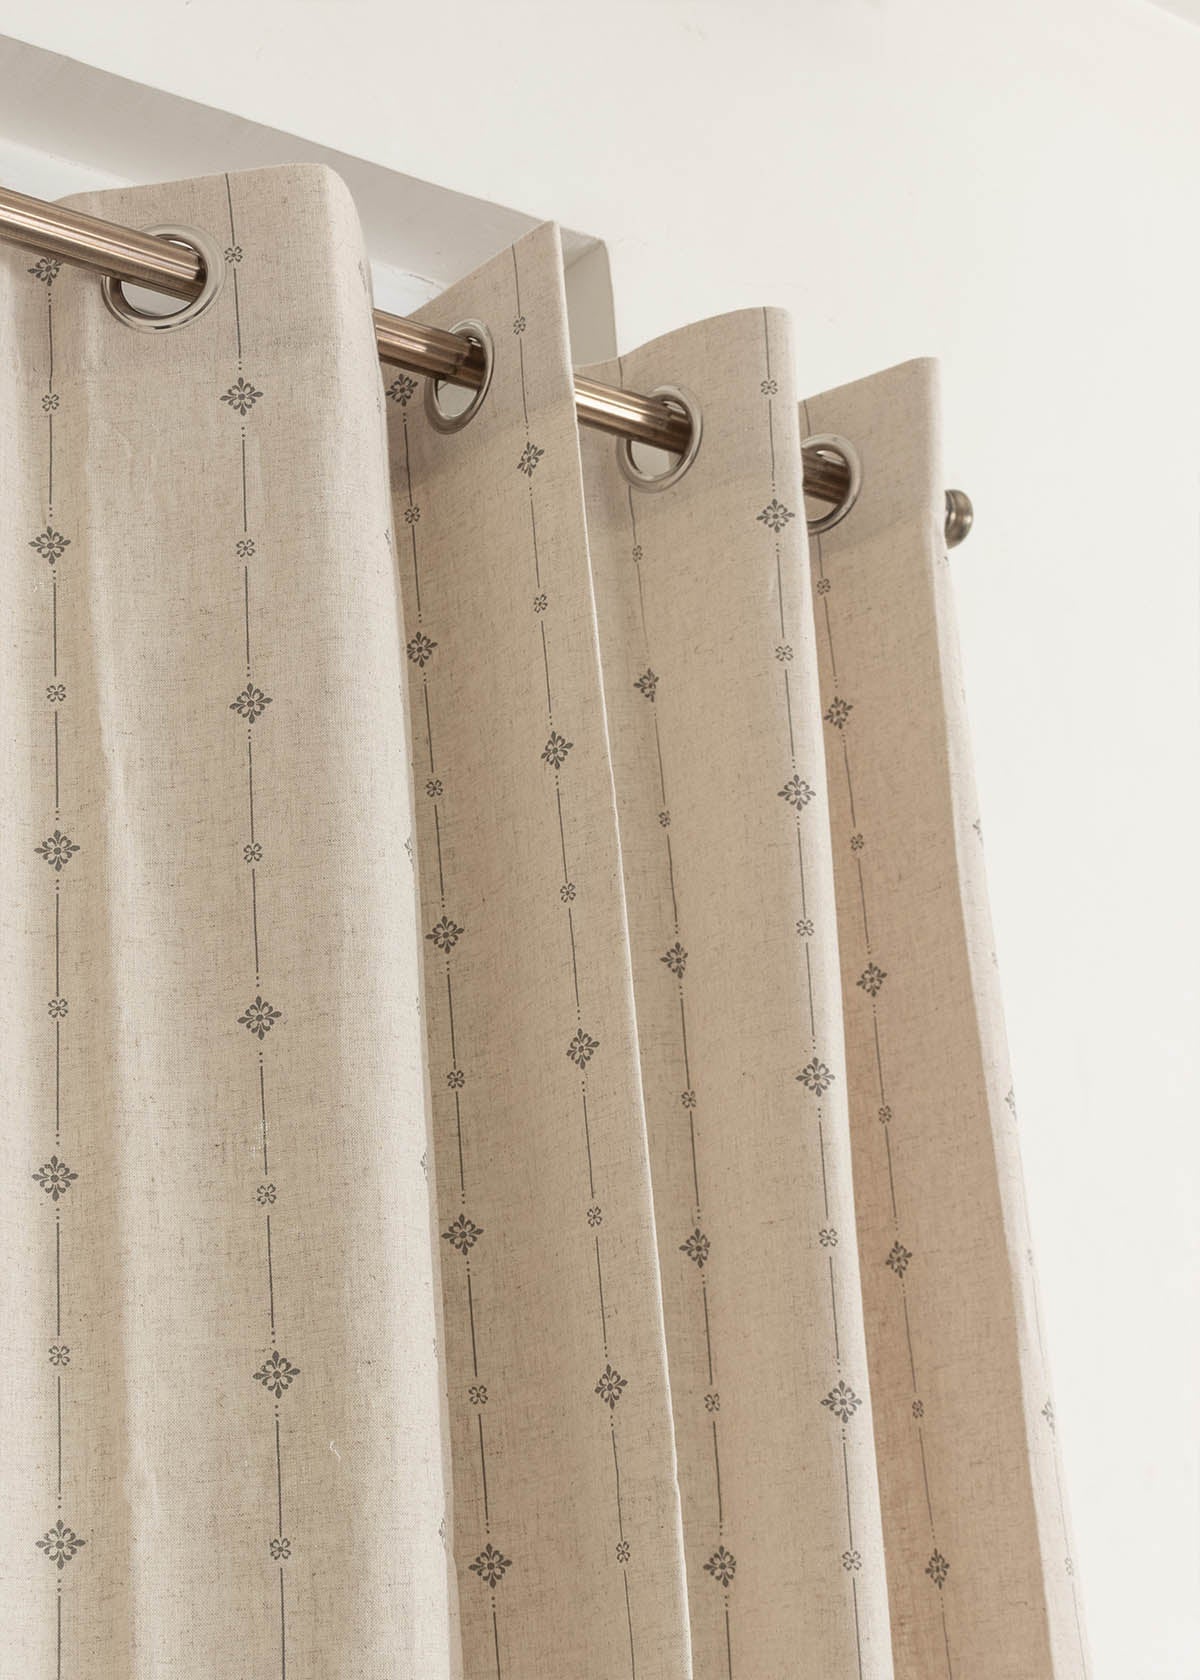 Tulsi linen 100% cotton ethnic curtain for Living room & bedroom - Room darkening  - Beige - Pack of 1